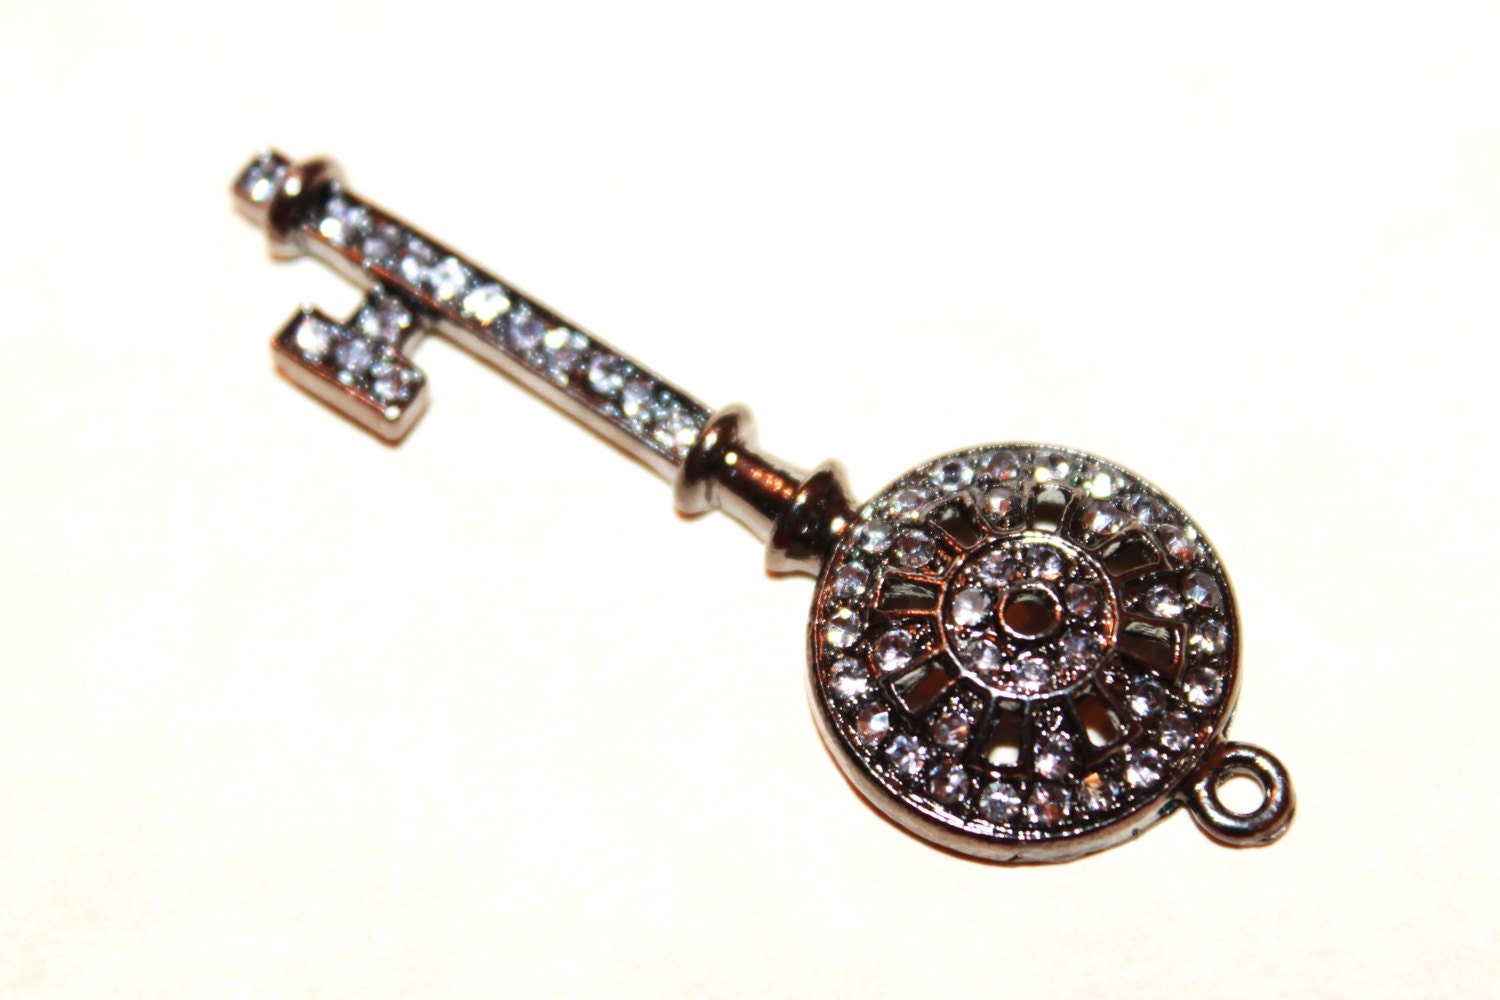 Rhinestone Key Pendant Charm for necklace by GorchessBoutique